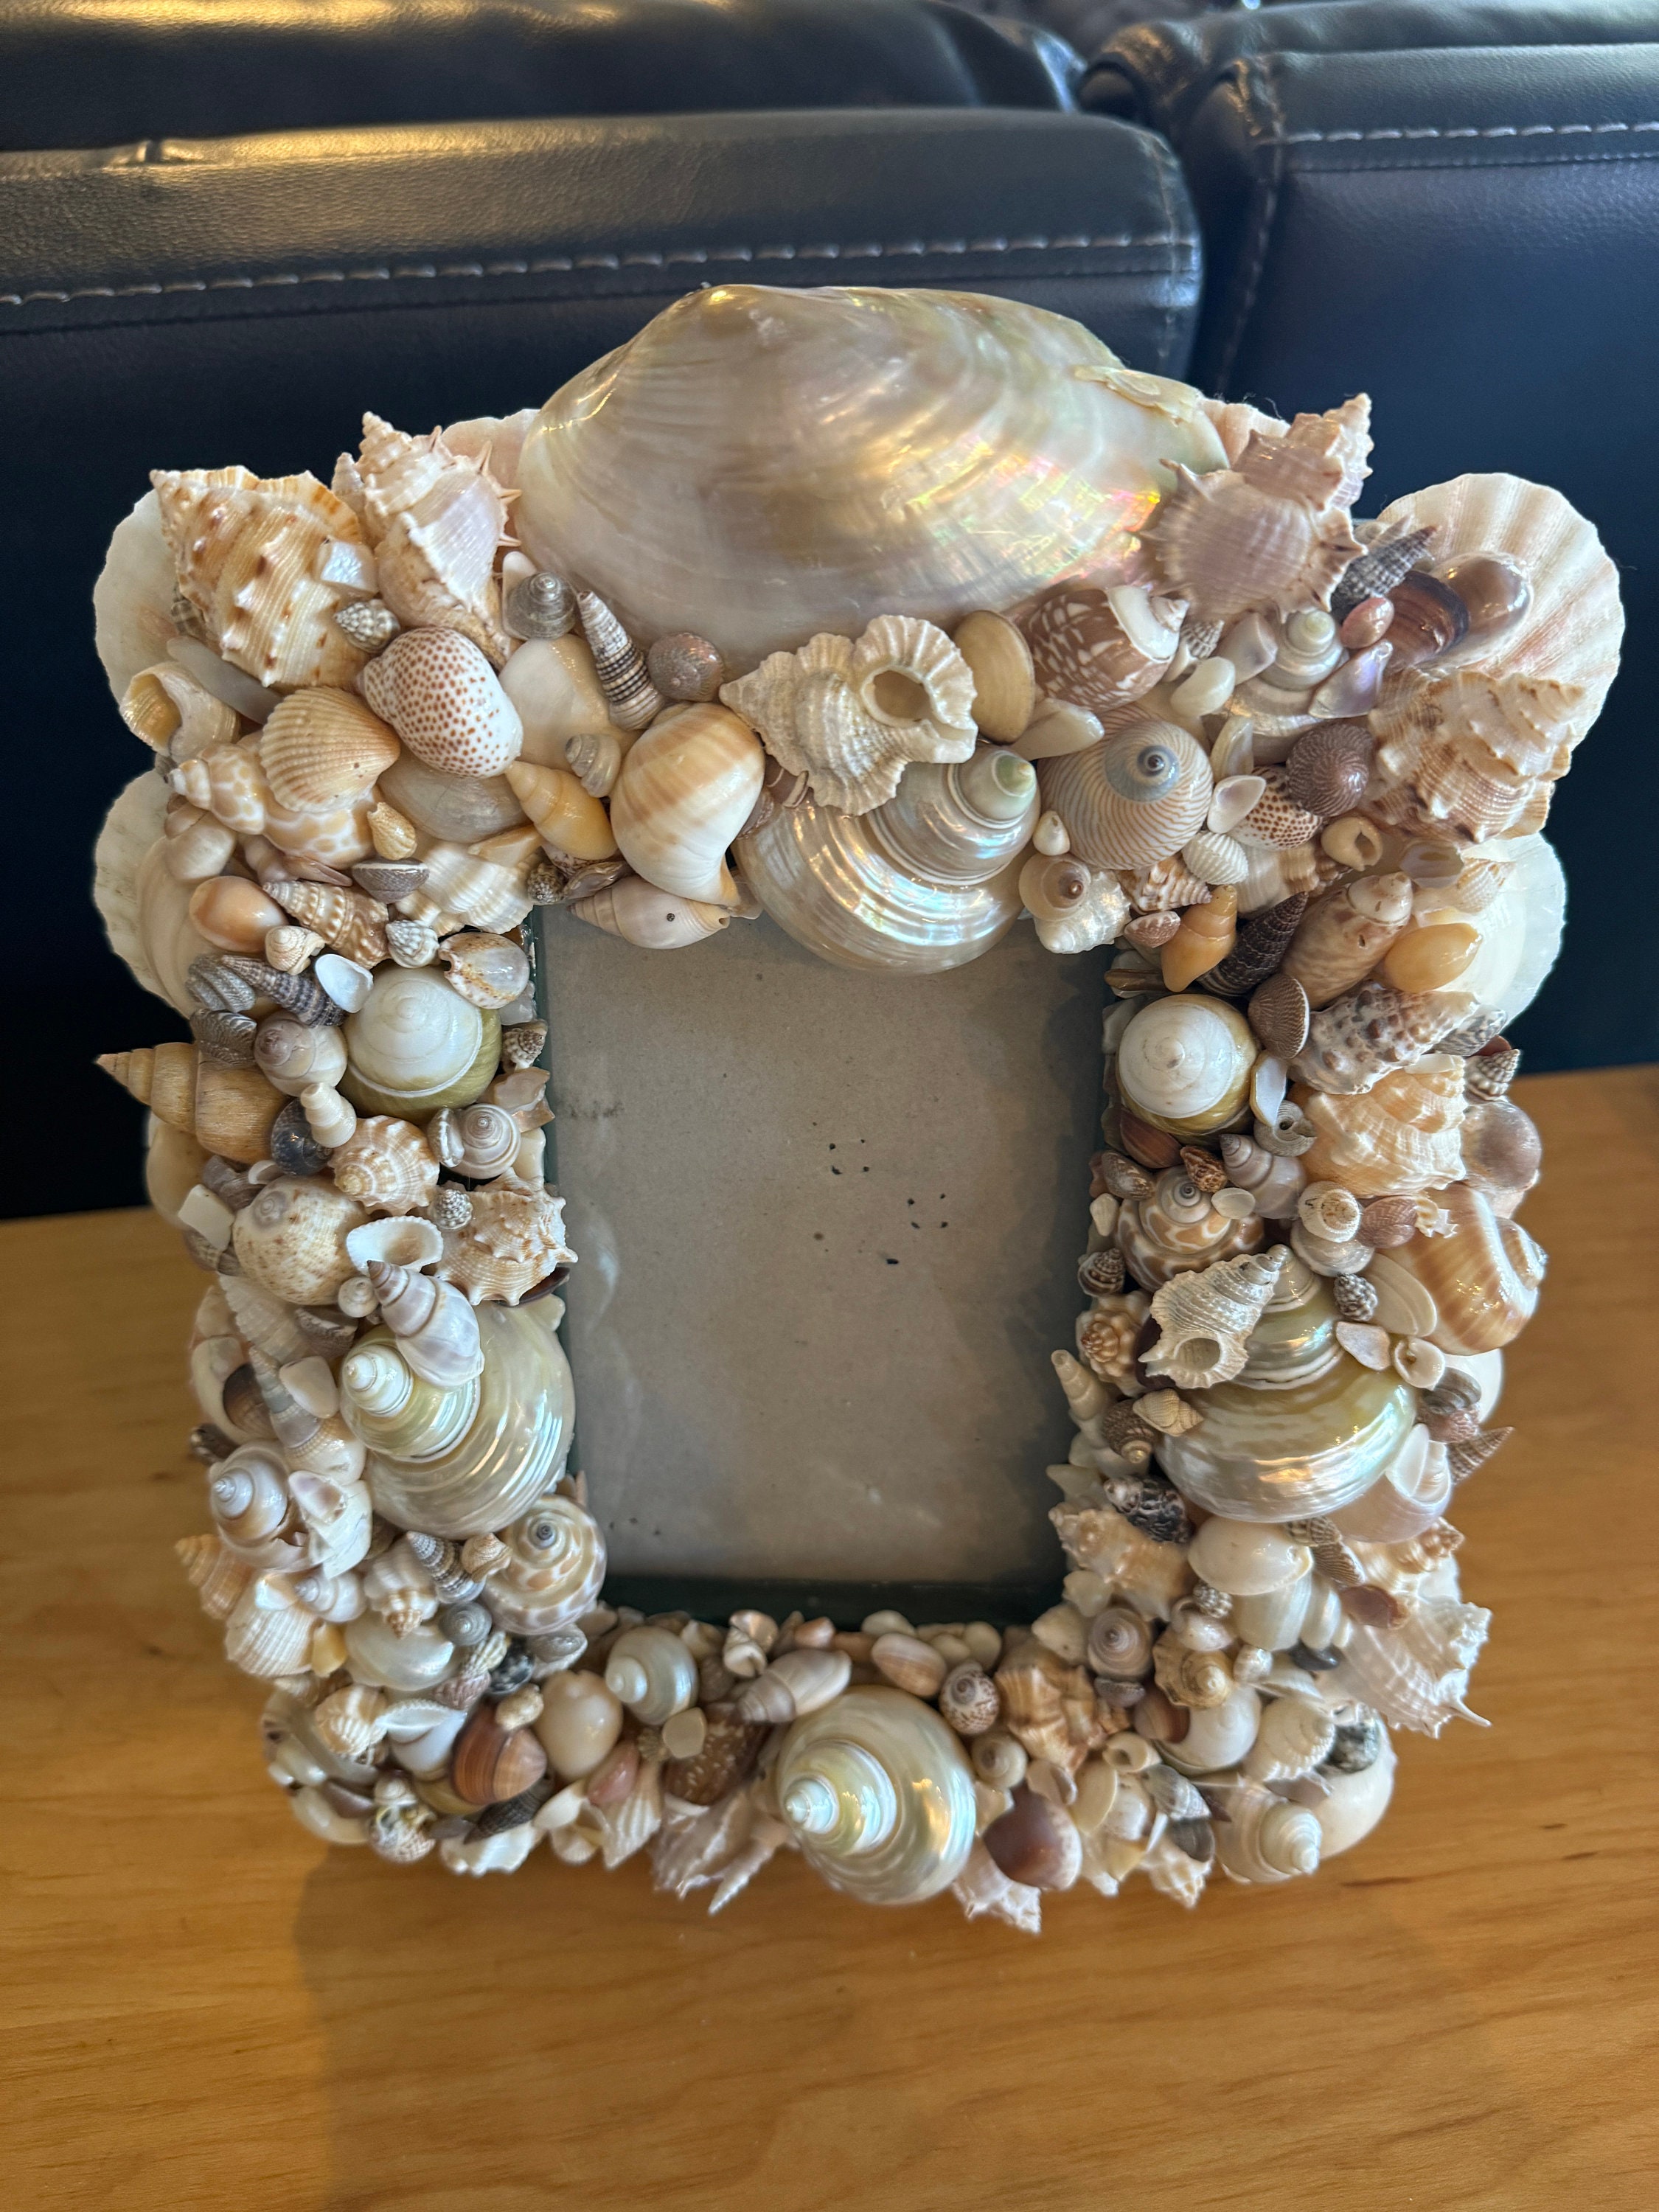 8 X 10 5 X 7 Matted Abalone Shell Mosaic Photo Frame Beach Frame Coastal  Living Seashell Nautical Decor Cottage Chic 